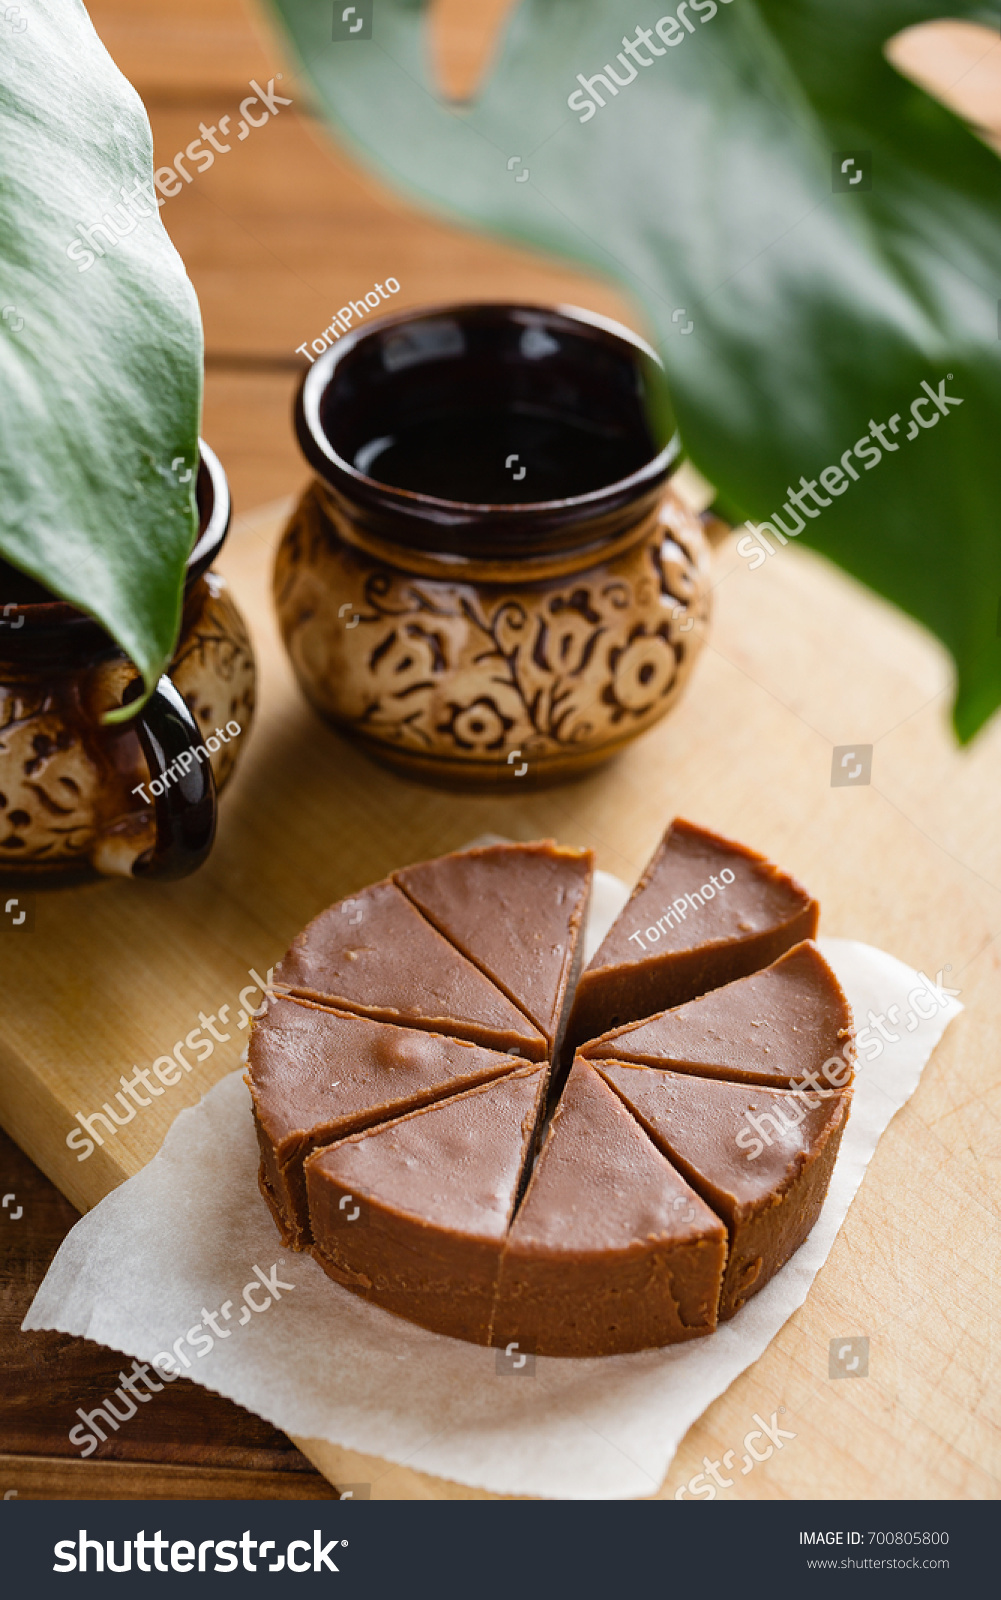 https://www.shutterstock.com/image-photo/homemade-chocolate-fudge-banana-flavor-on-700805800